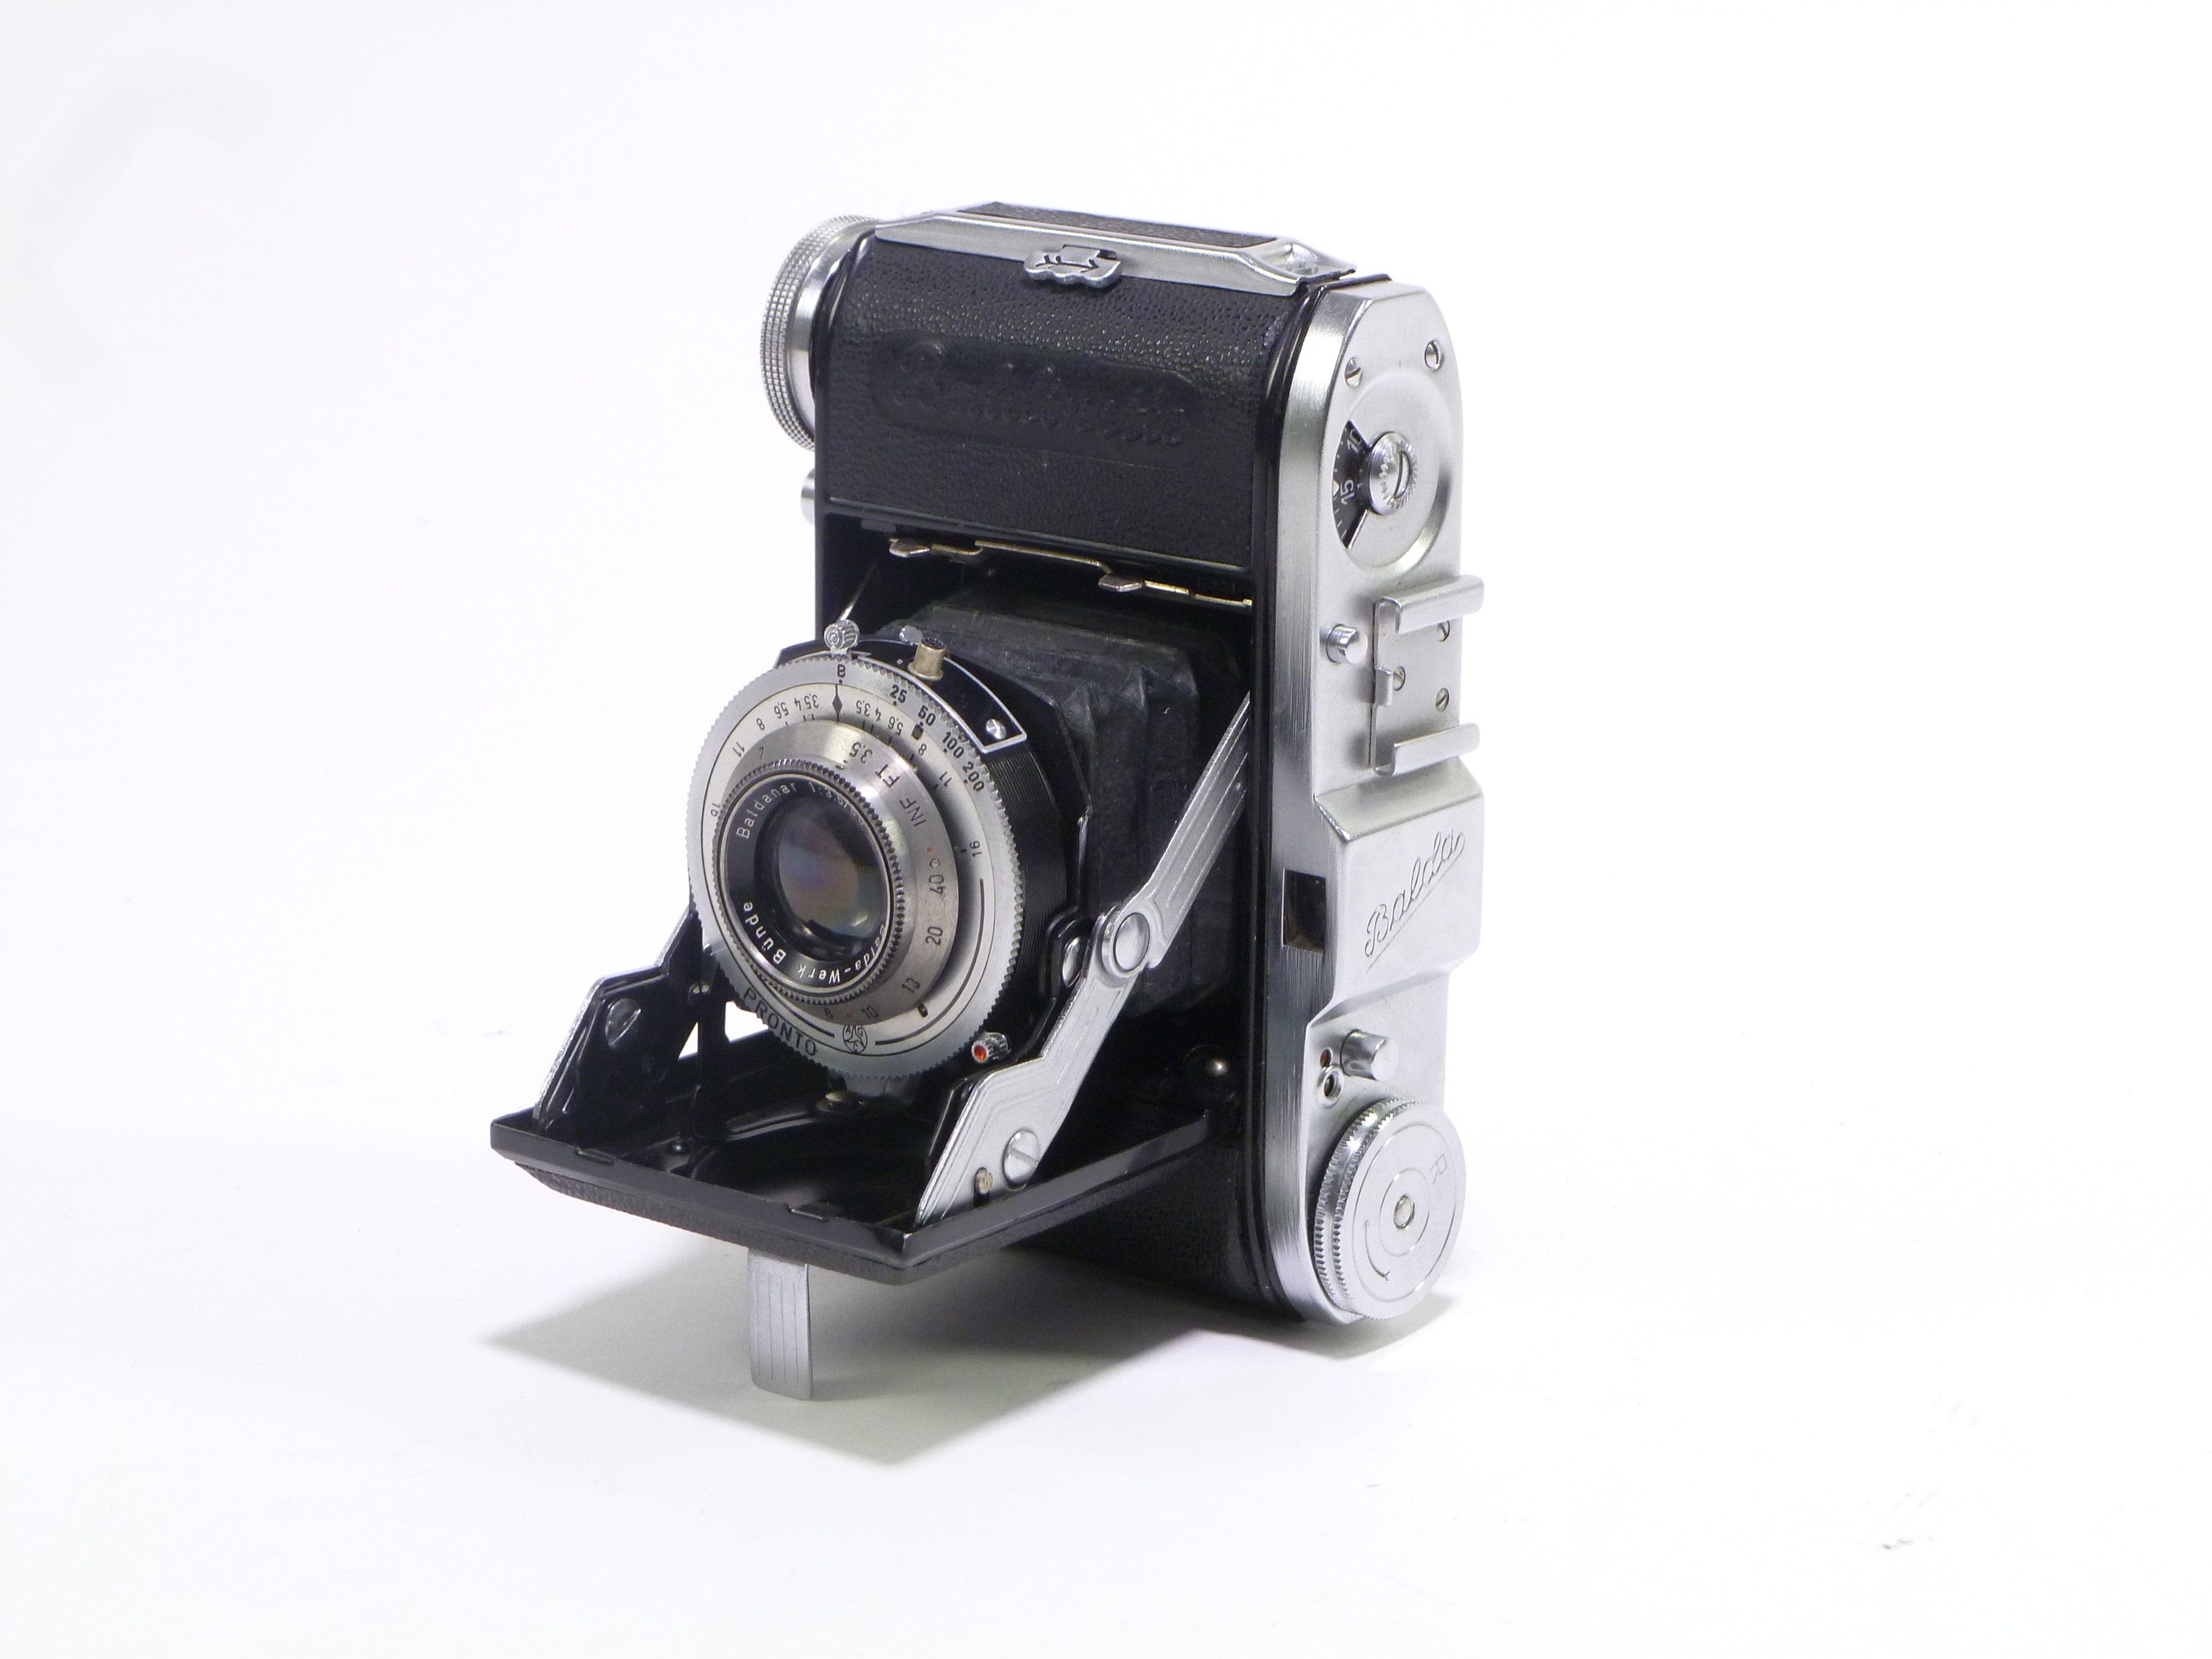 Balda Baldinette Bunde Bellows Camera w/ Baldanar 50mm F3.5 C Lens